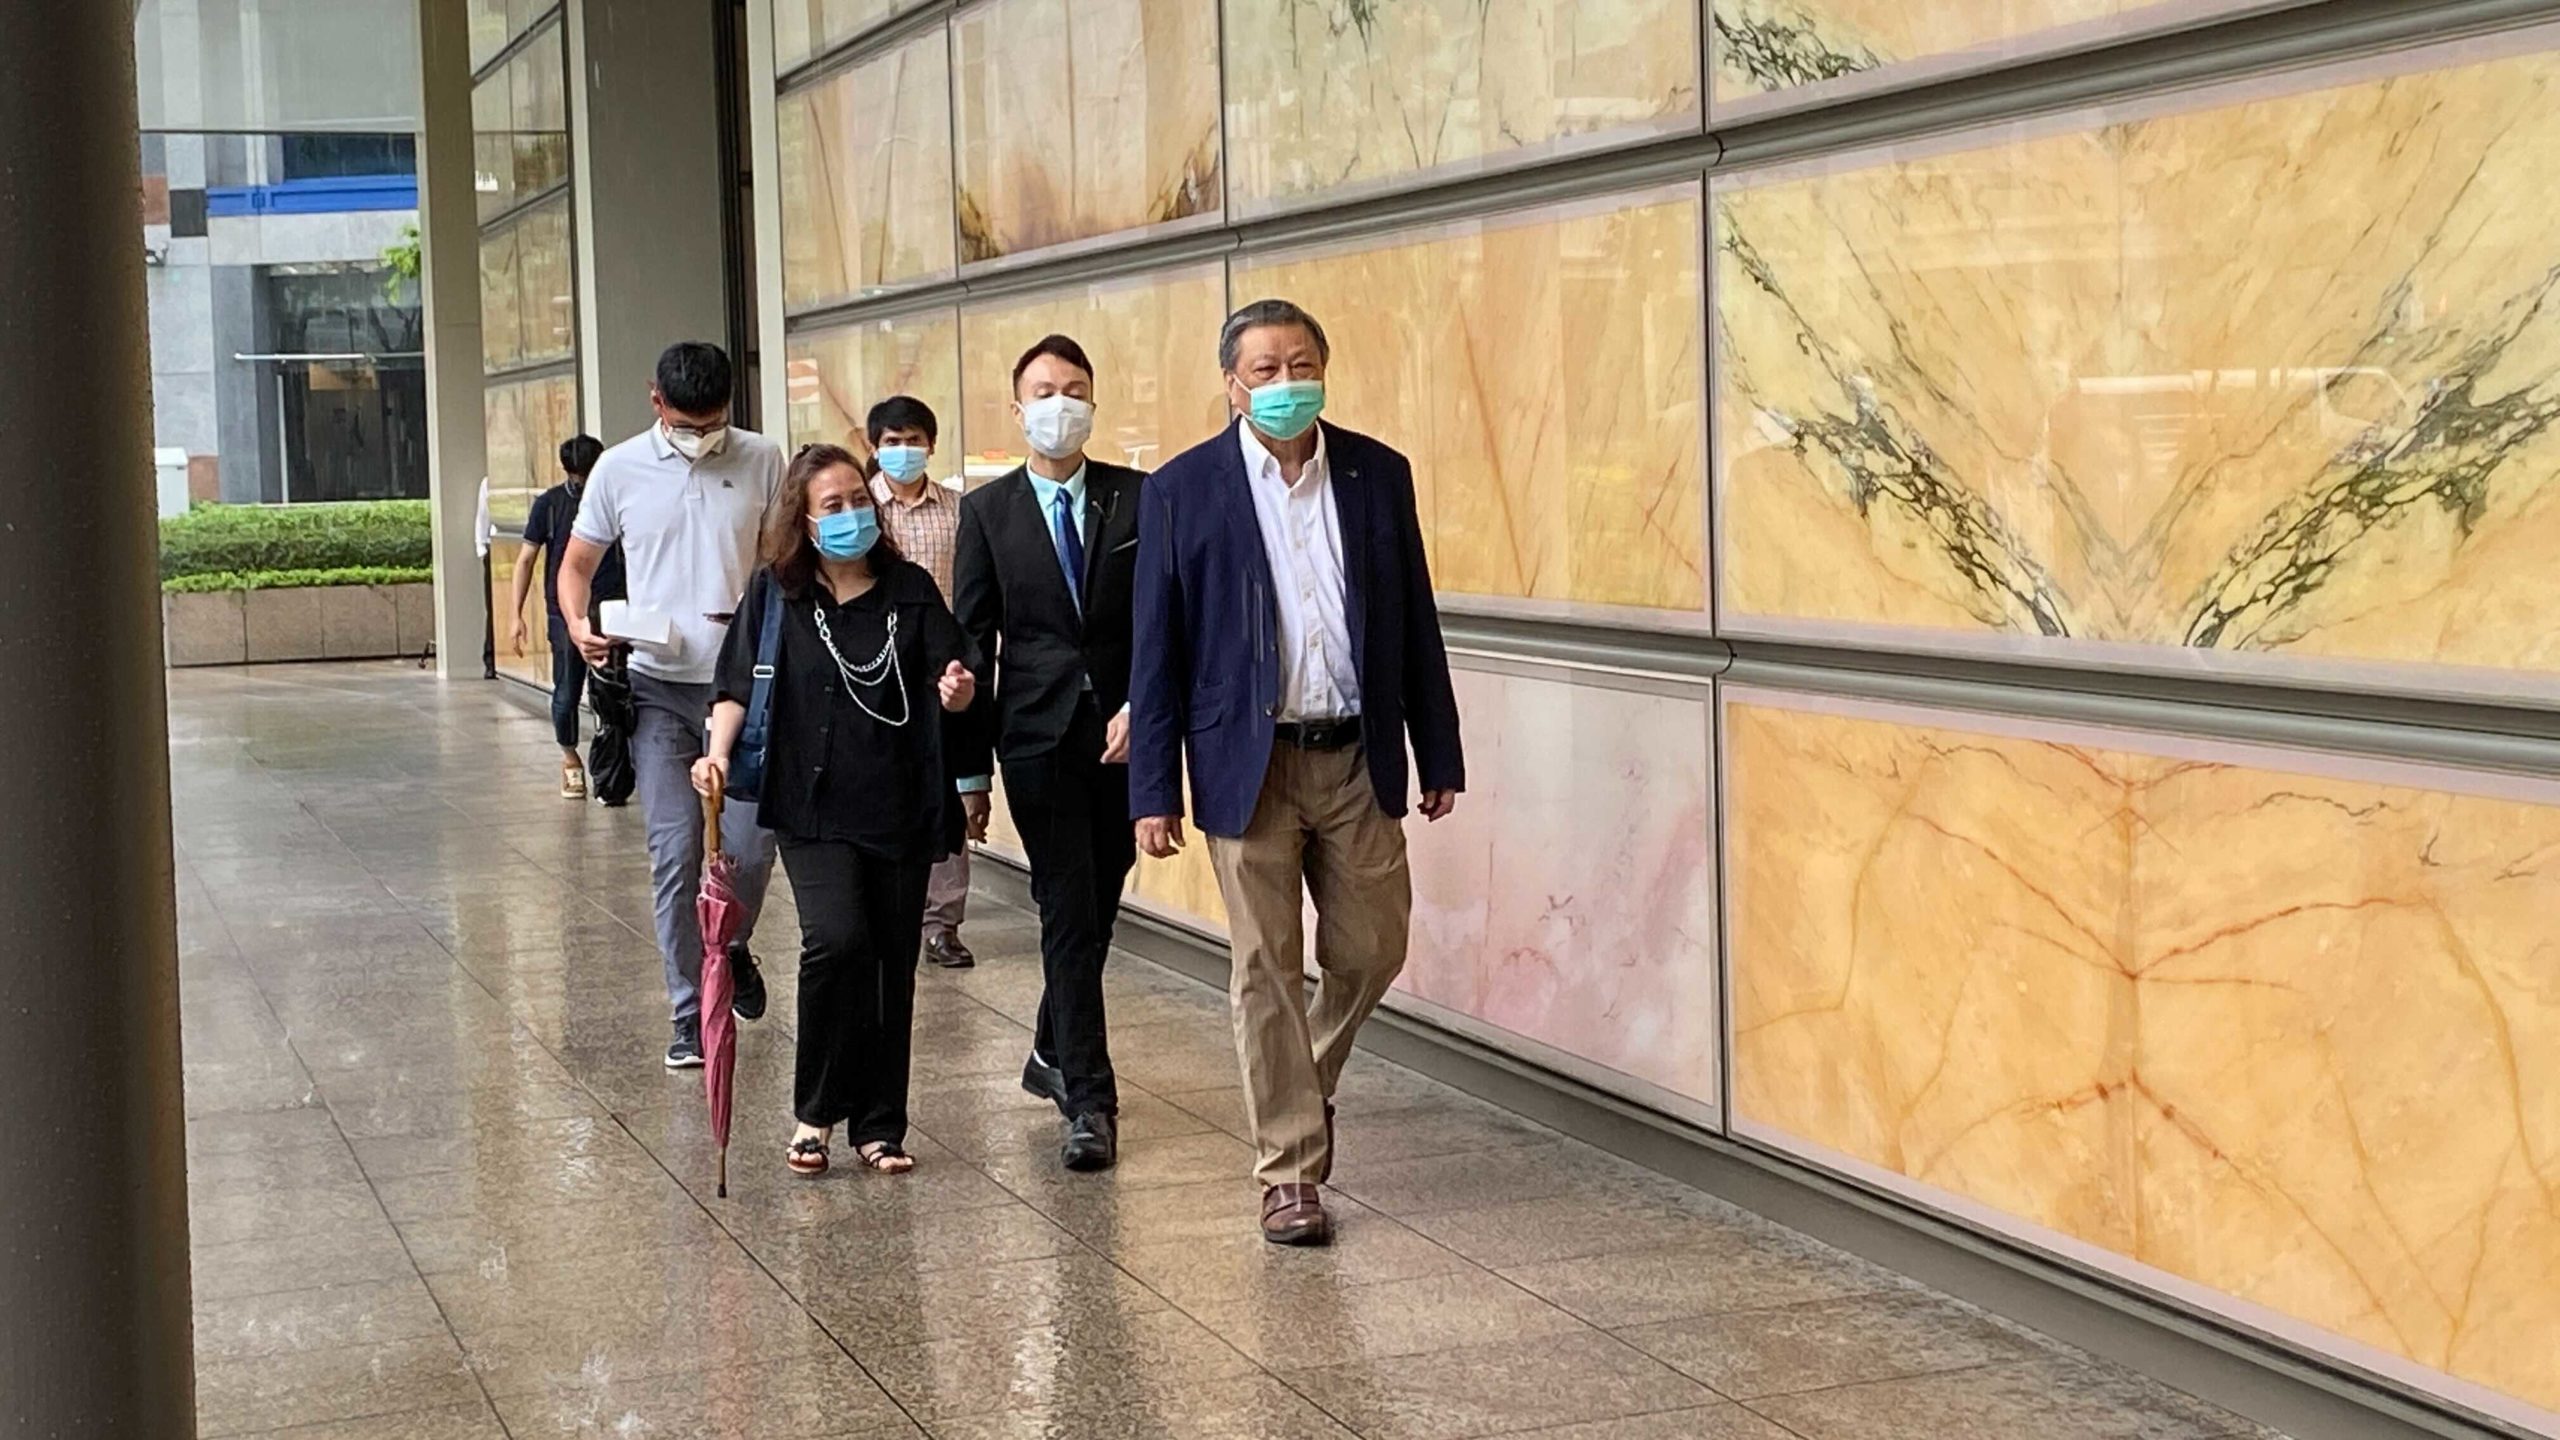 Blogger Leong Sze Hian walks to the supreme court entrance on Nov. 30, 2020. Photo: Carolyn Teo/Coconuts